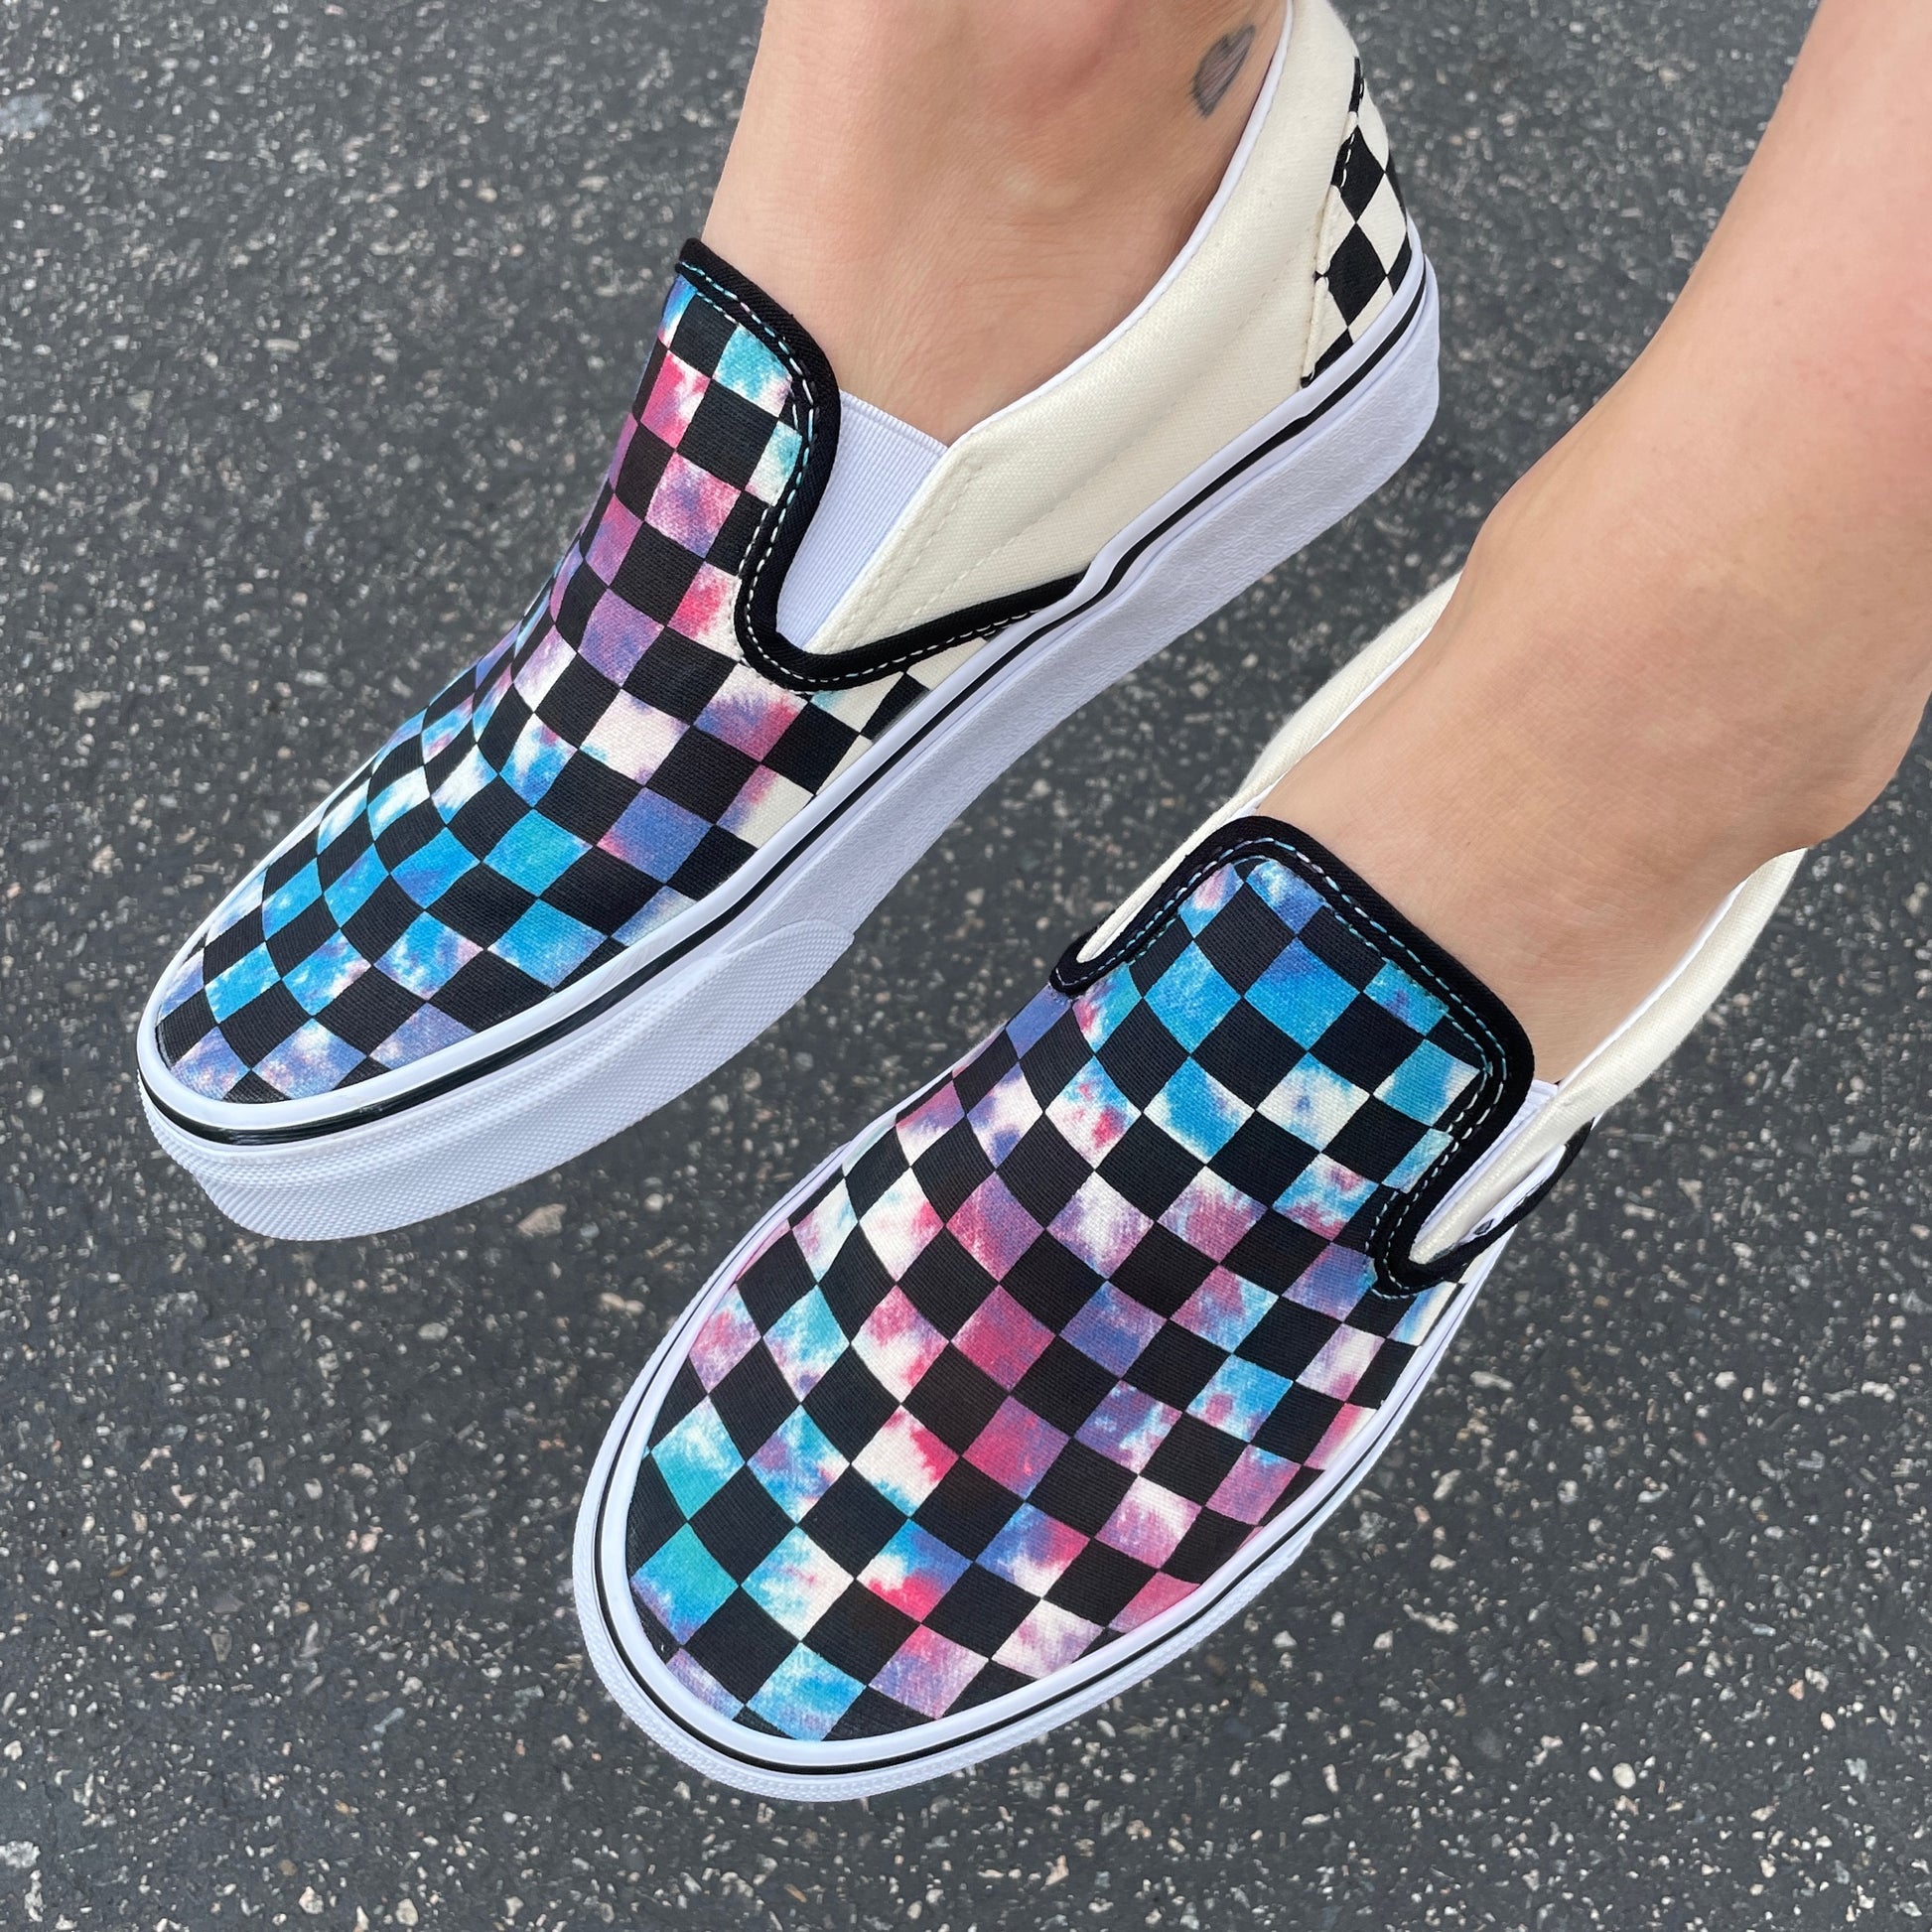 Custom Checkerboard Vans Men’s Slip On Size 9